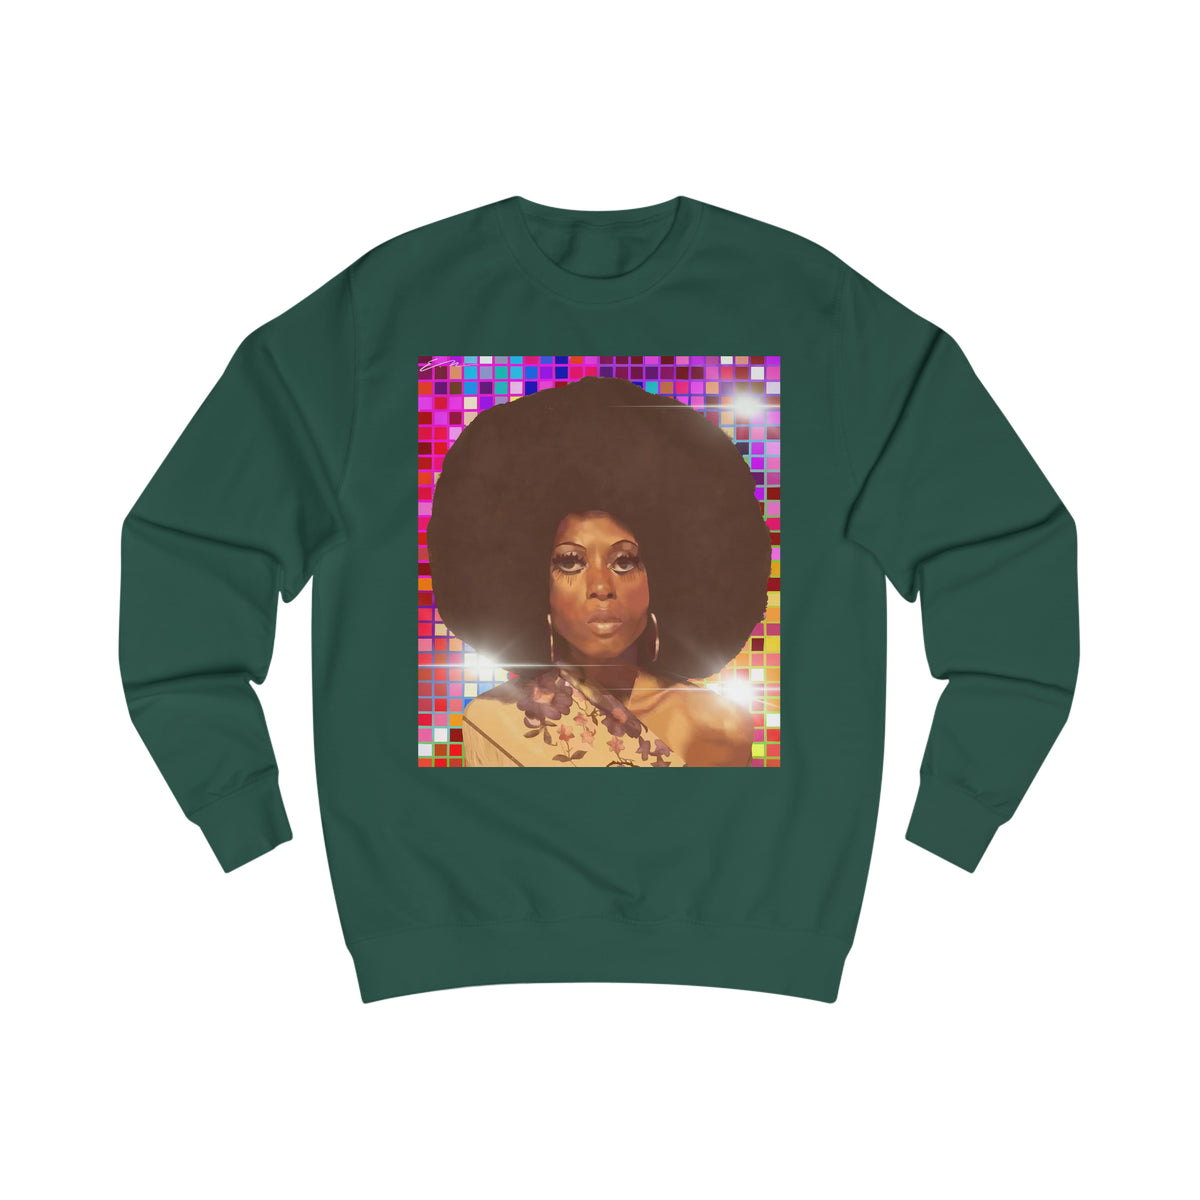 Diana Disco Men's Sweatshirt